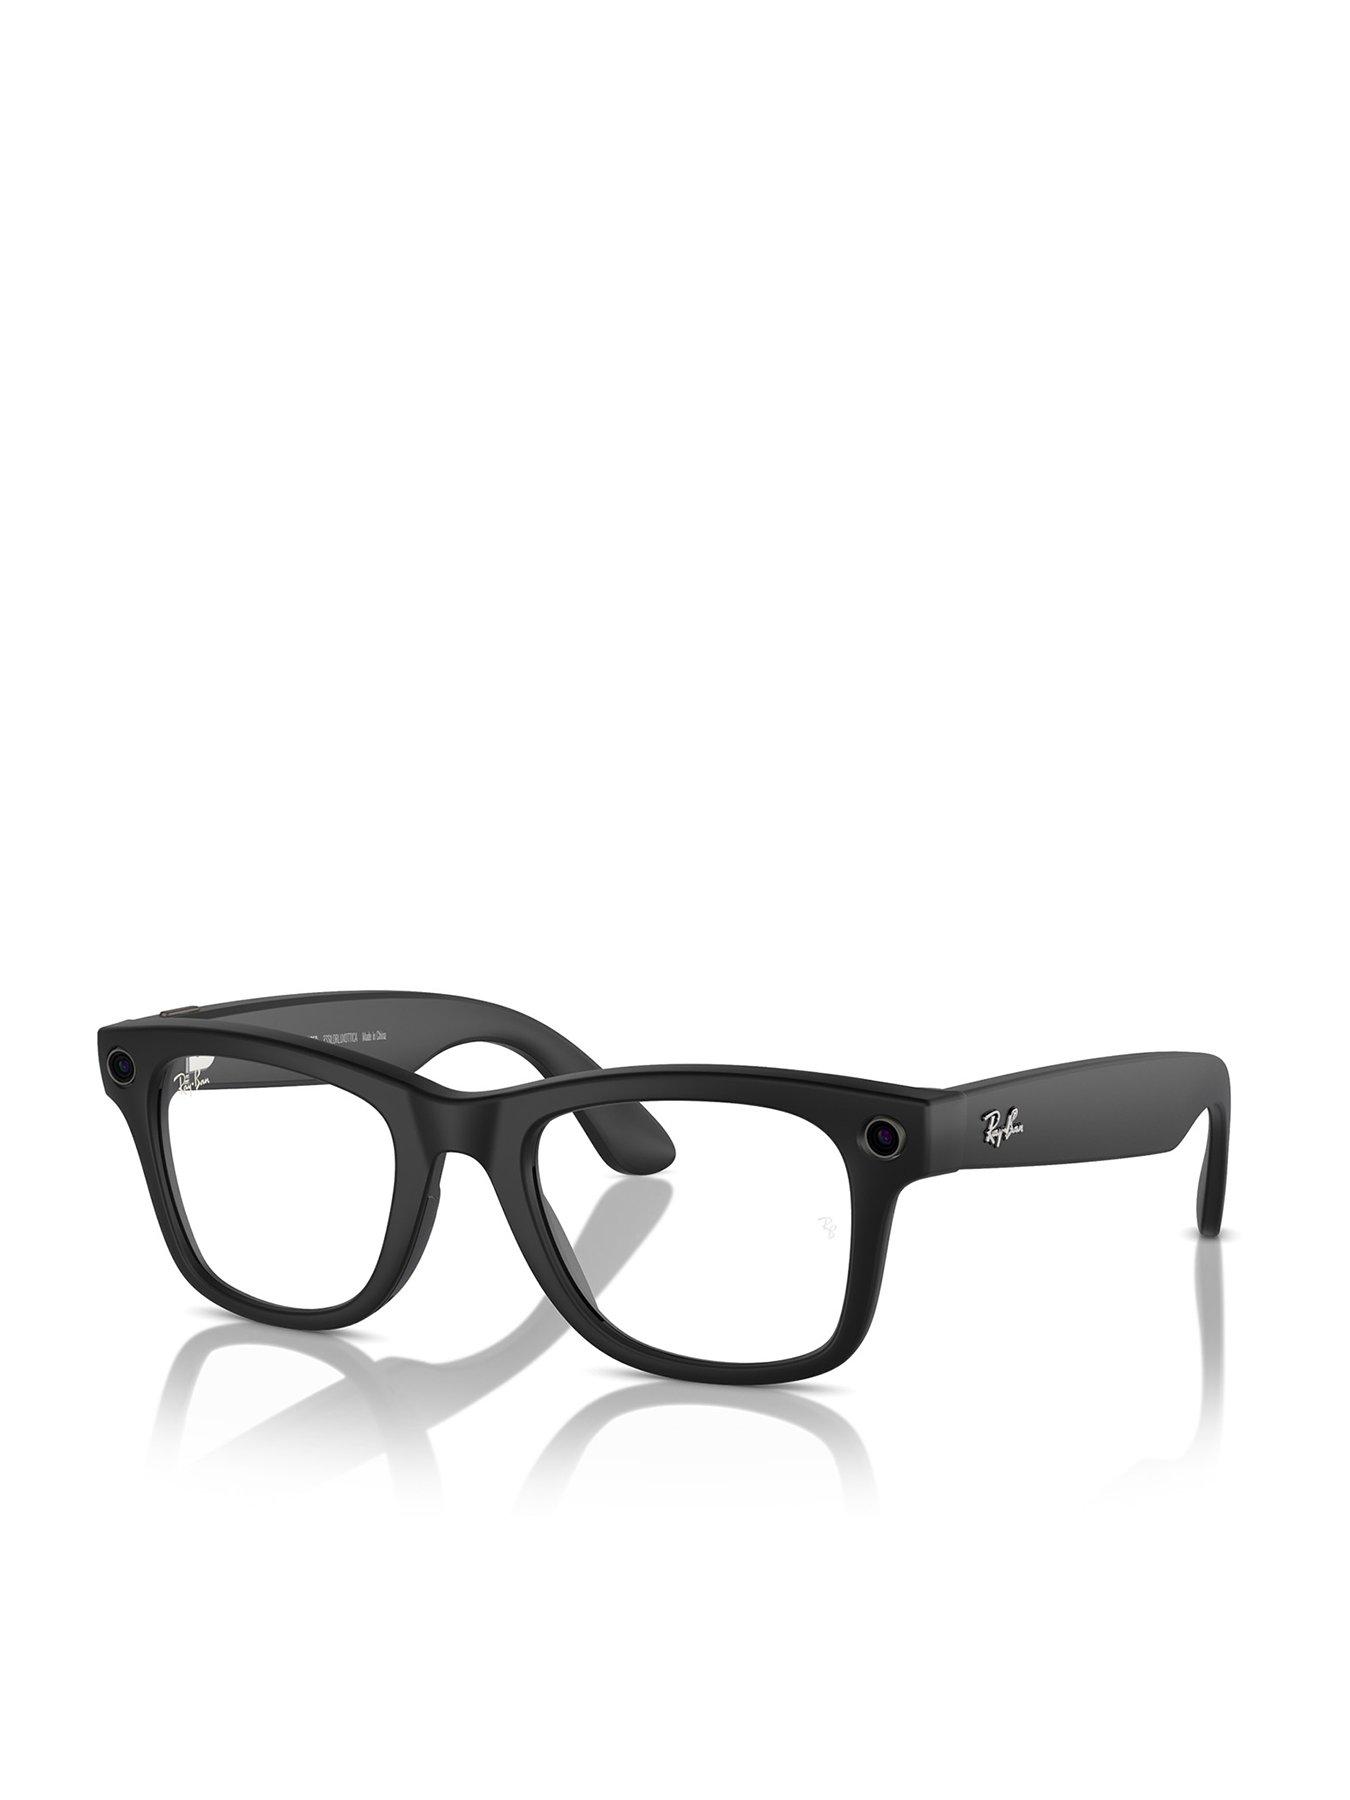 Rayban - Meta Ray-Ban, Meta Wayfarer (Standard) Smart Glasses - Matte Black,  Clear to G15 Green Transitions<sup>®</sup>